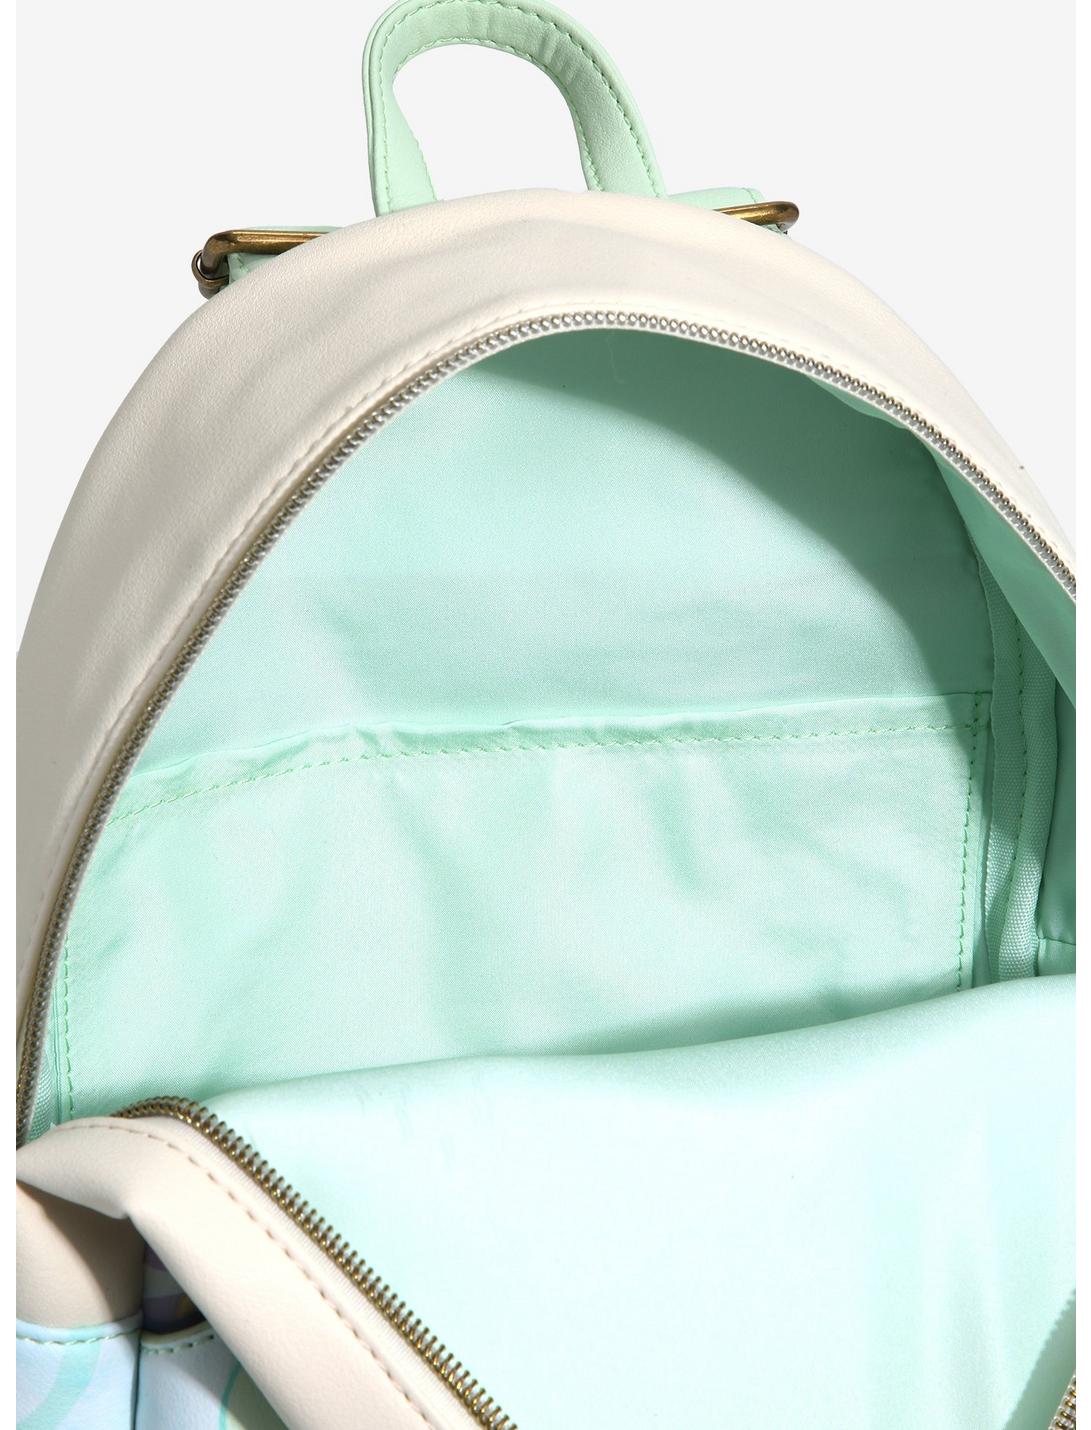 Loungefly Disney The Little Mermaid Shell Mini Backpack